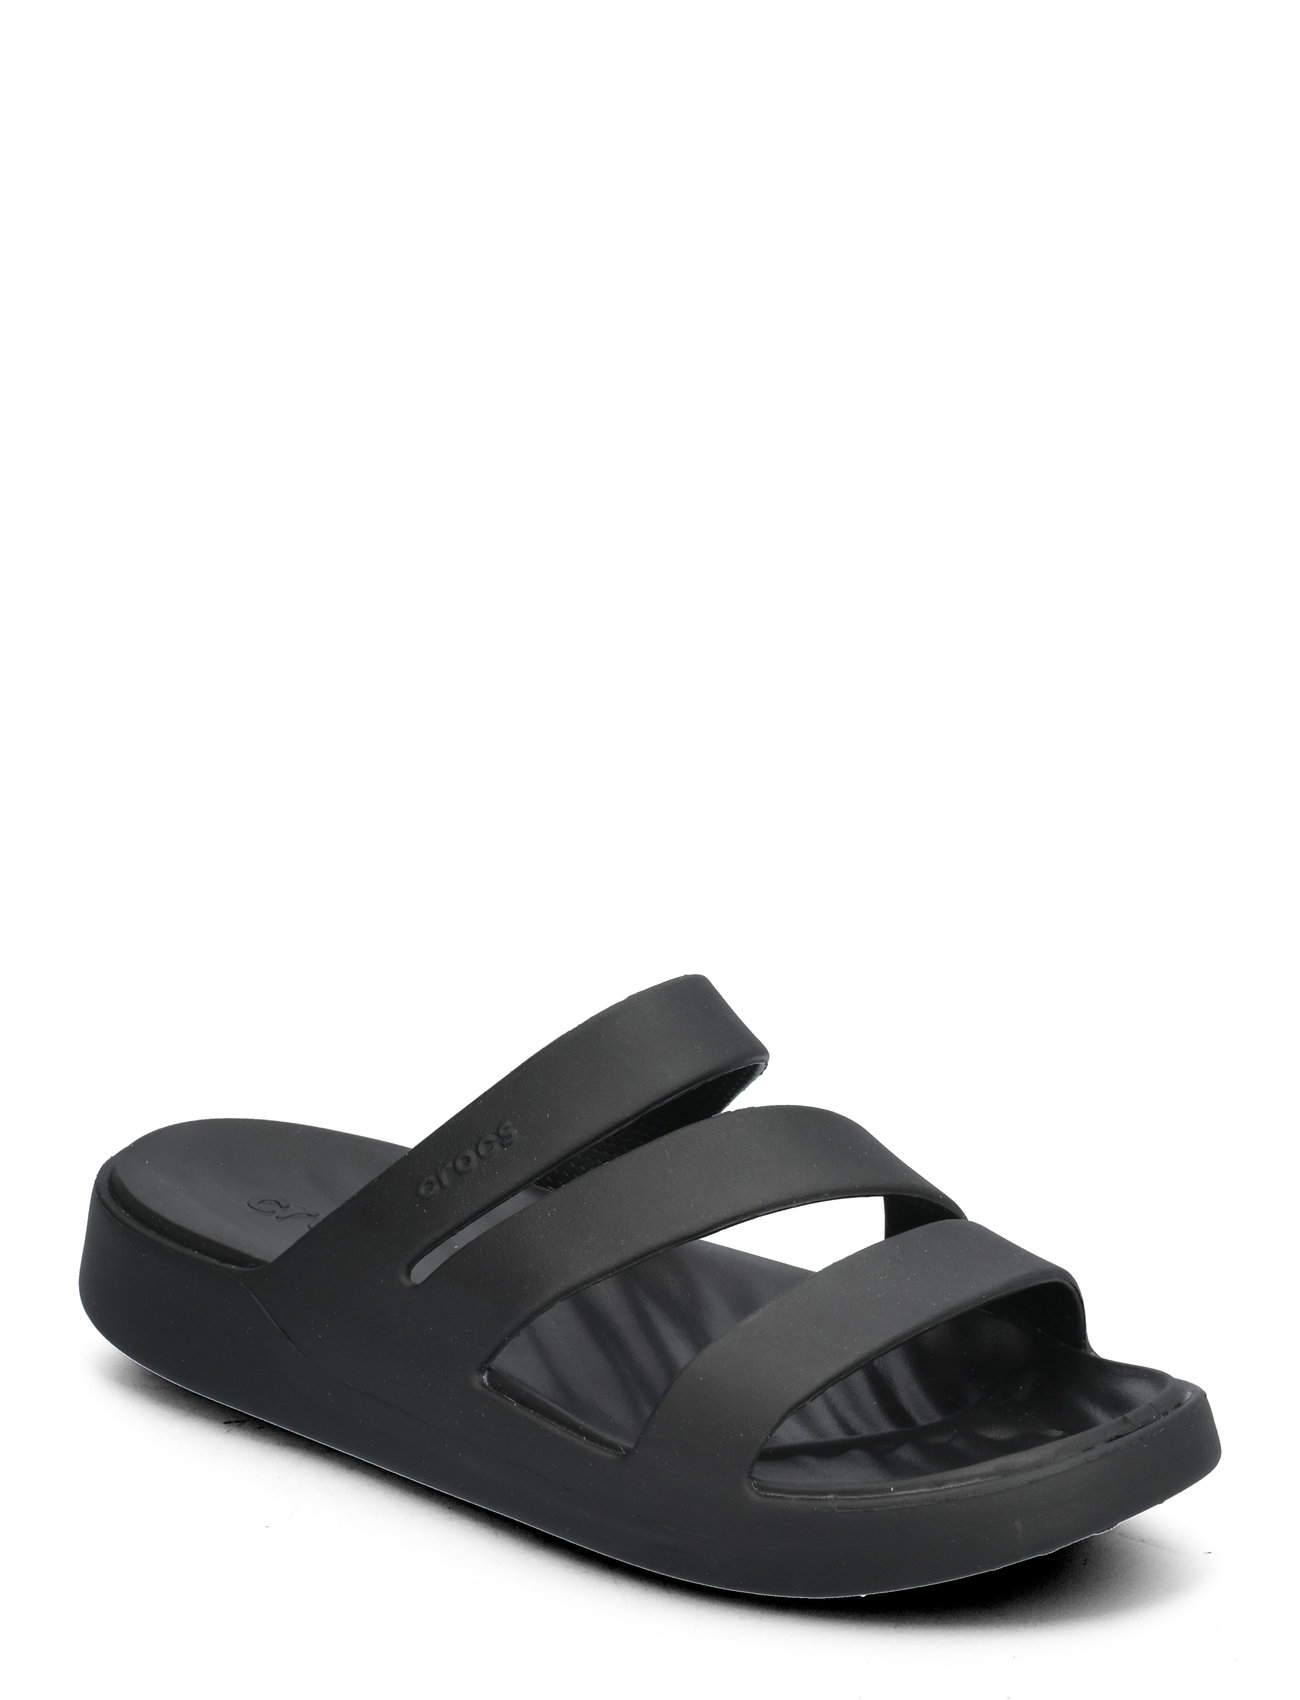 Getaway Strappy Shoes Summer Shoes Sandals Pool Sliders Black Crocs